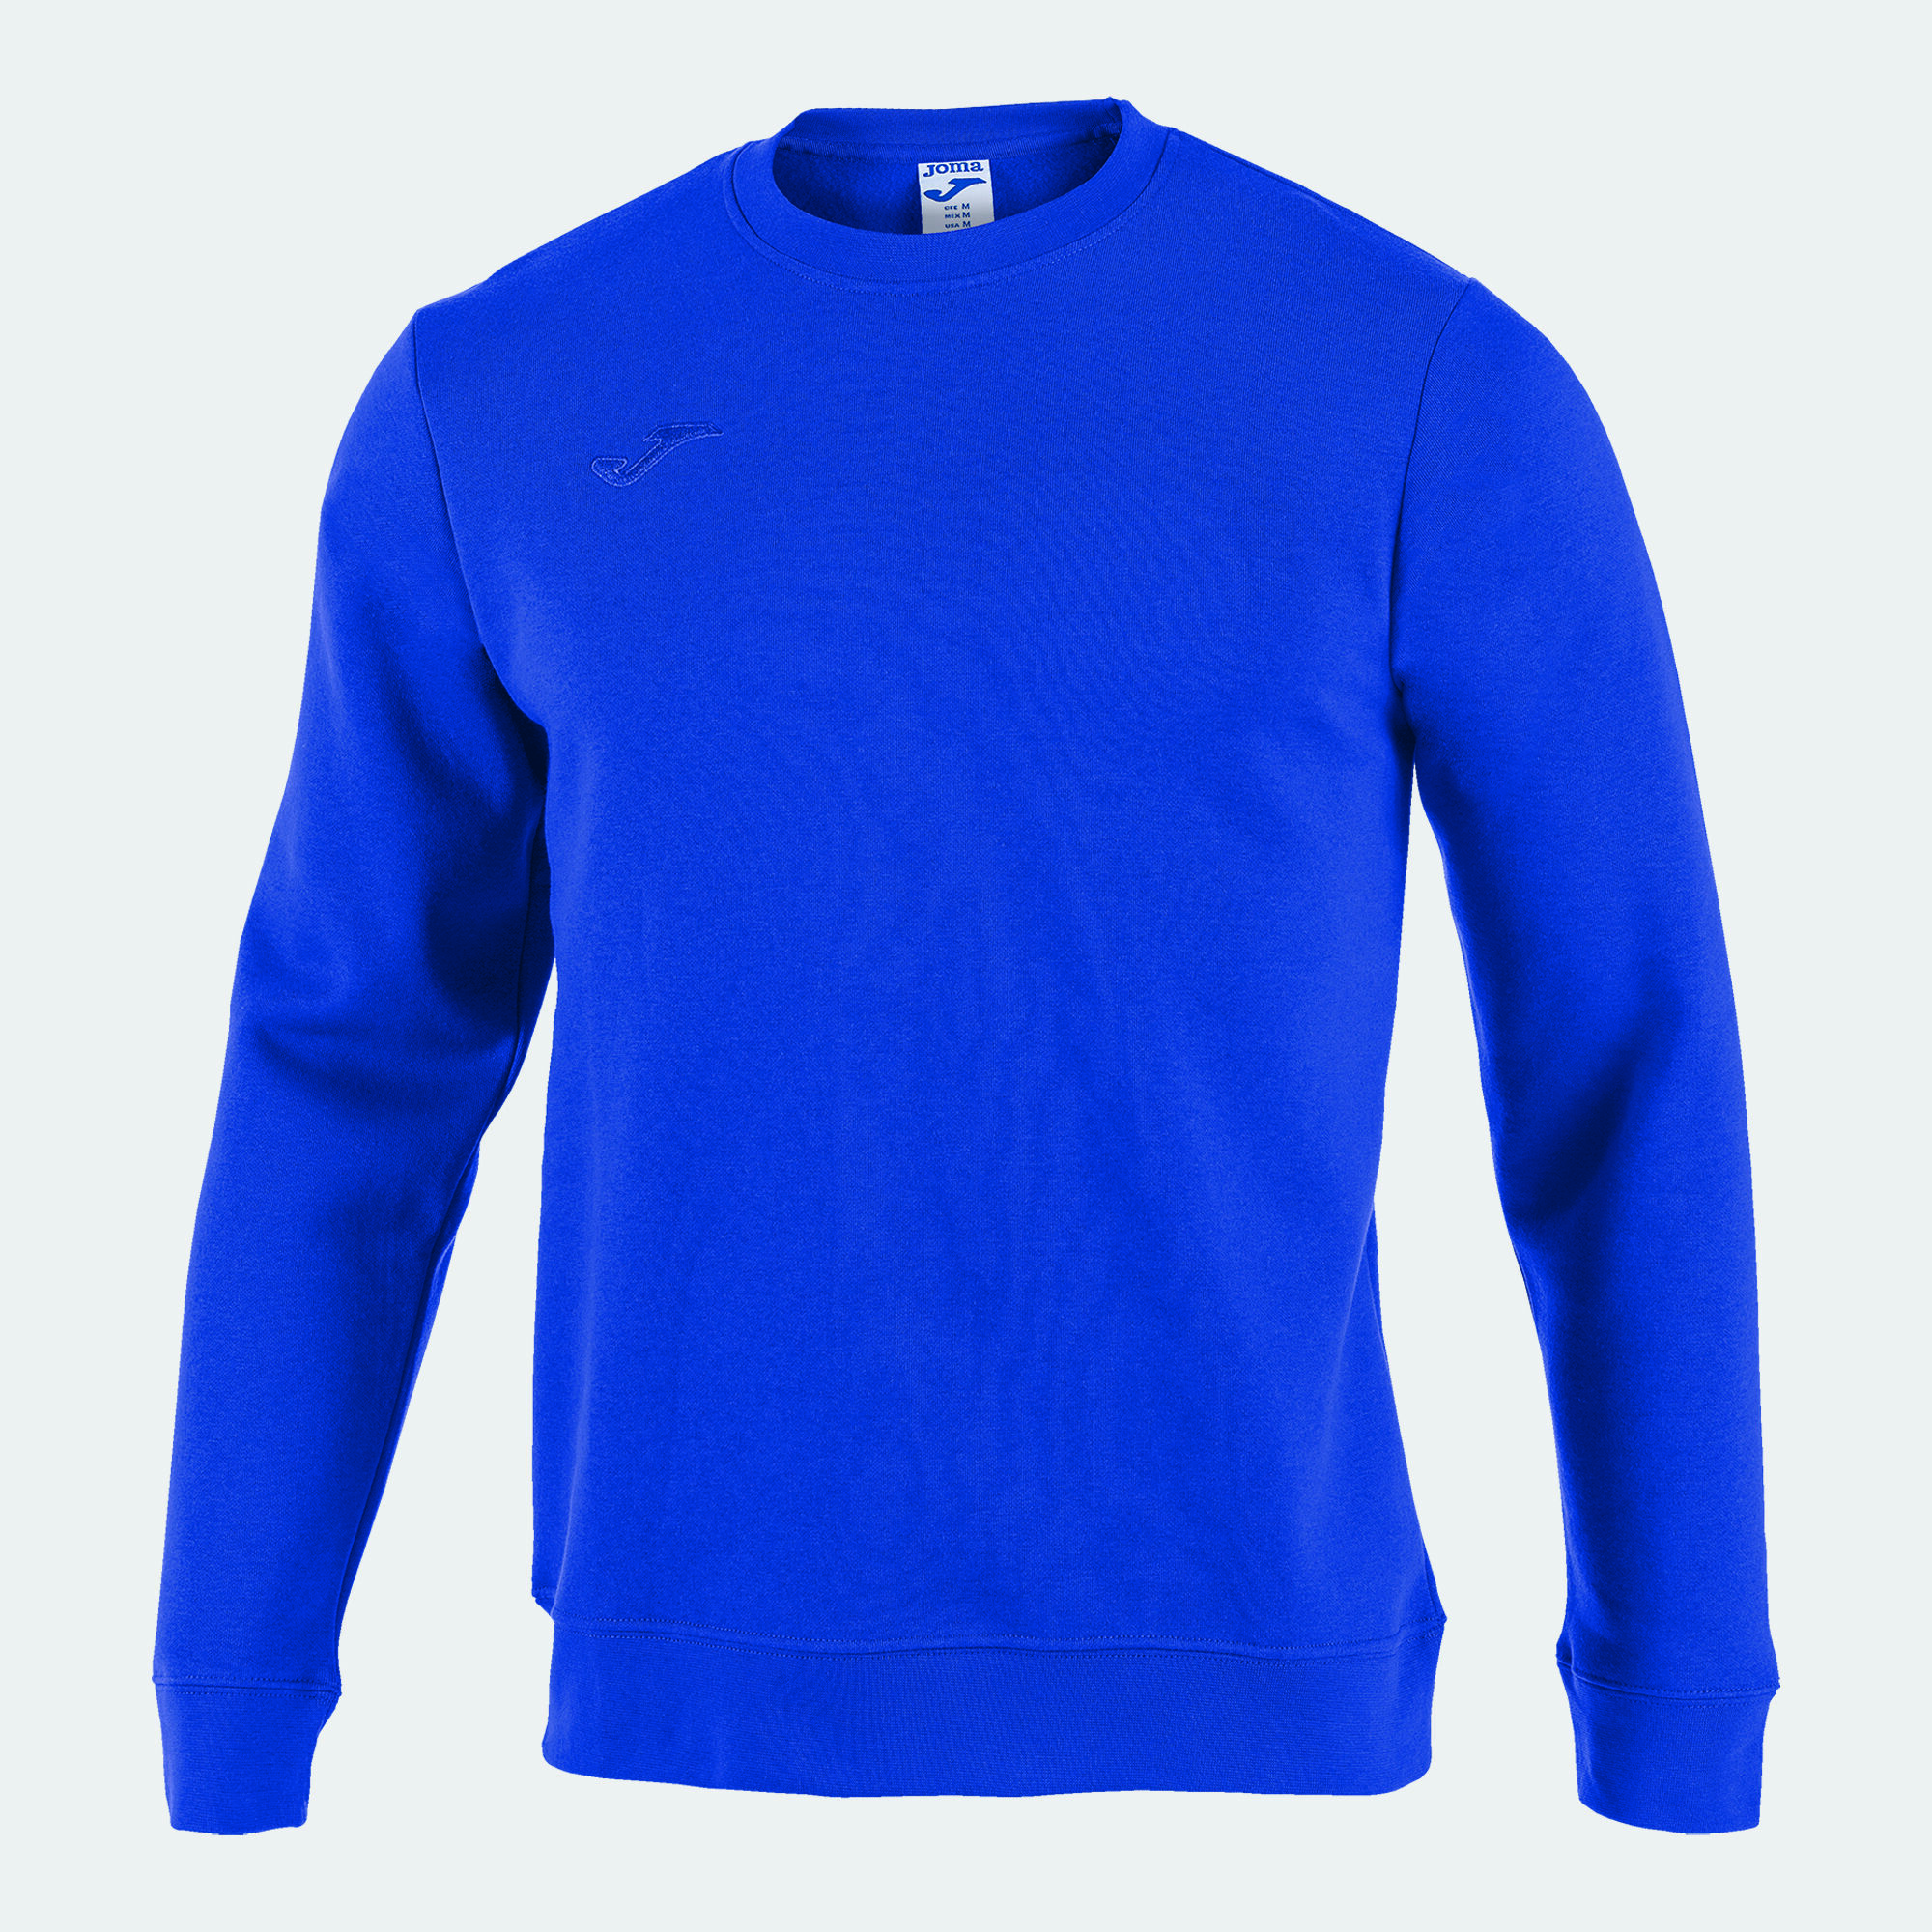 Sweat-shirt homme Santorini bleu roi